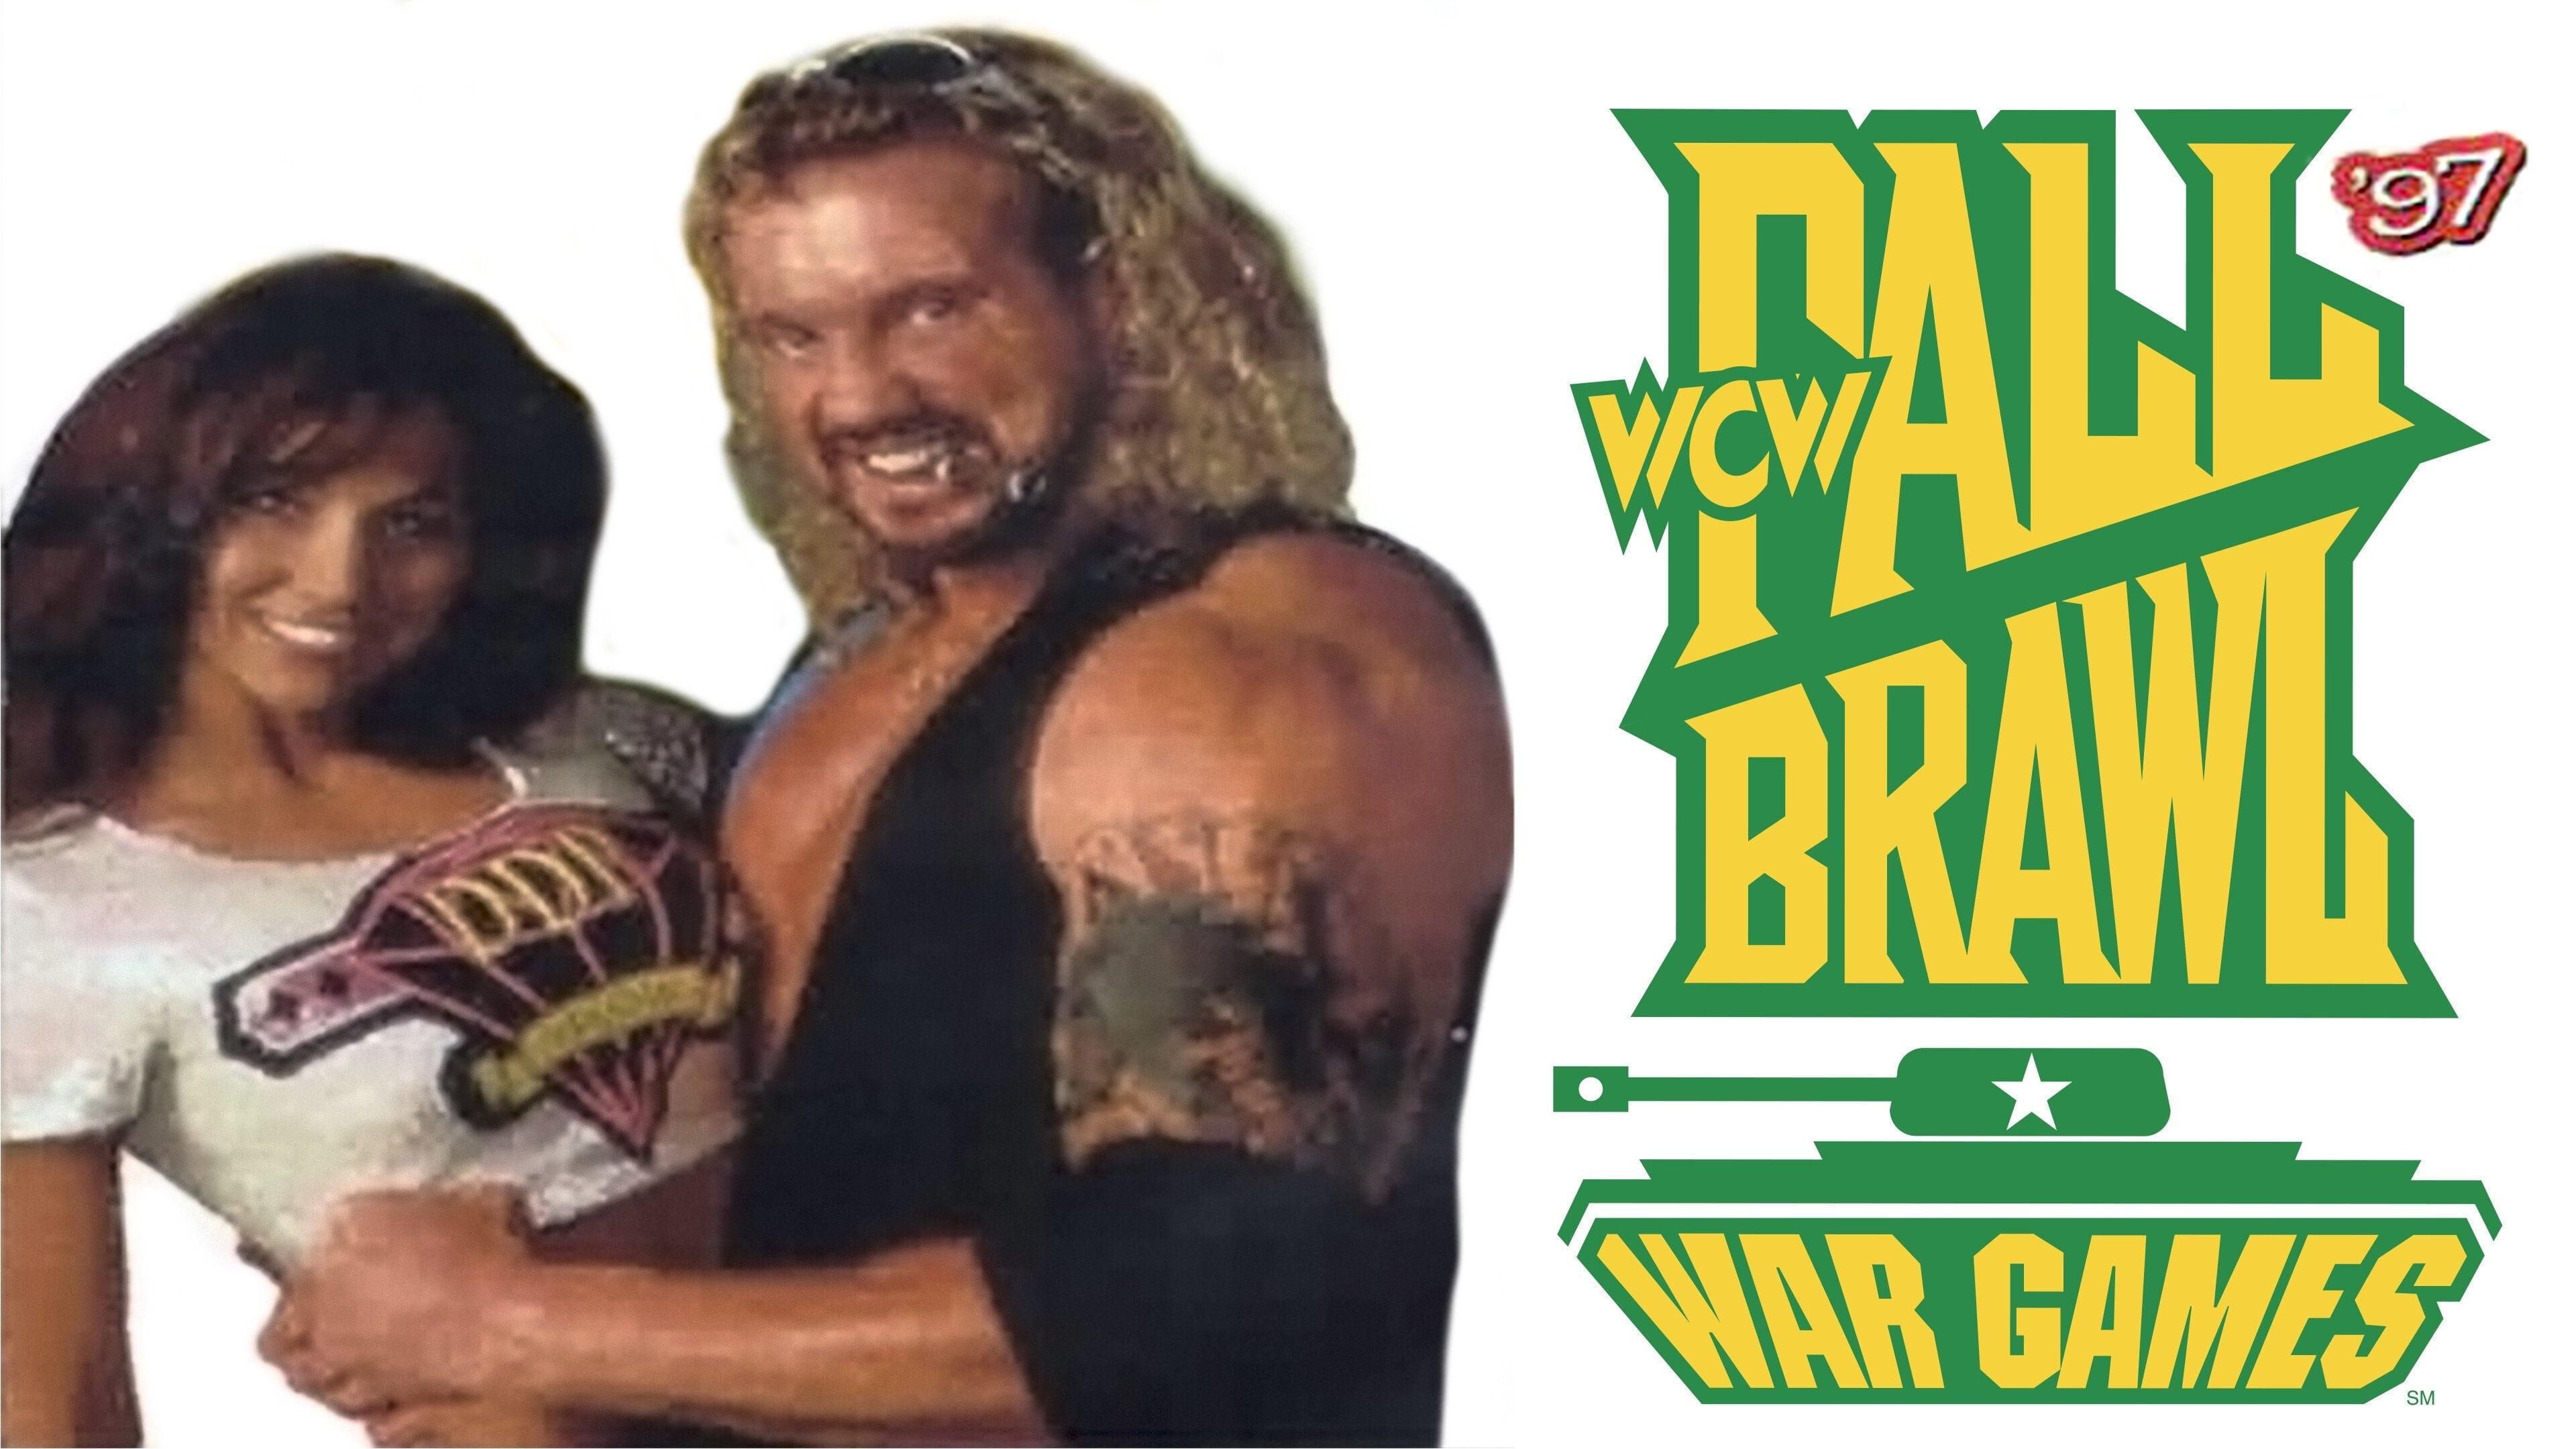 WCW Fall Brawl 1997 backdrop